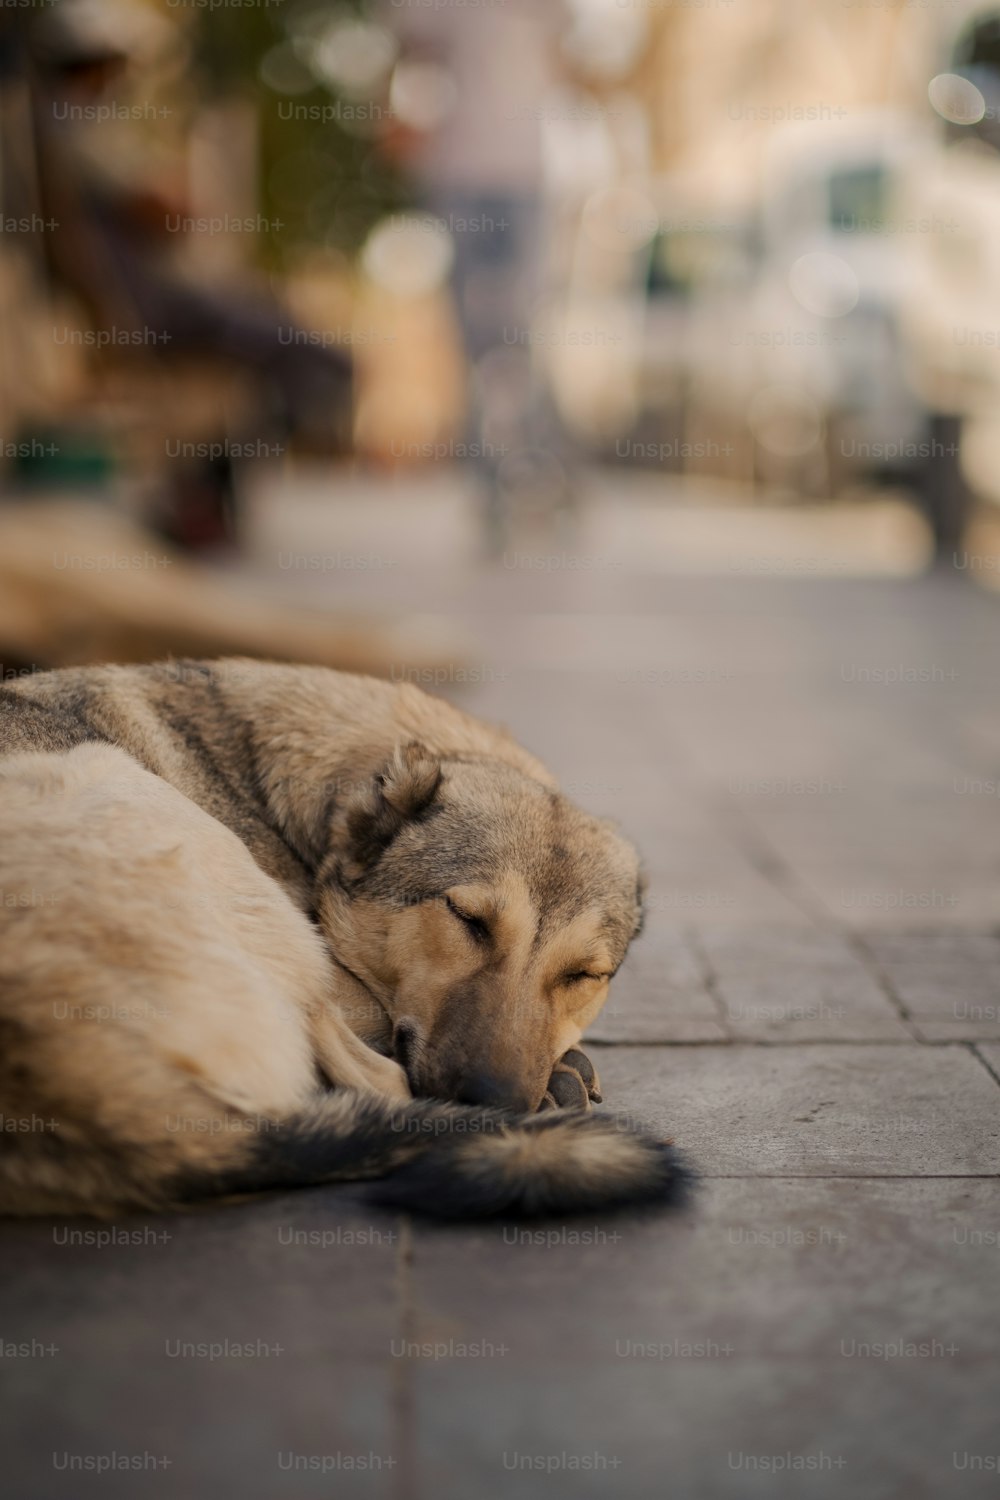 a dog is sleeping on the sidewalk outside